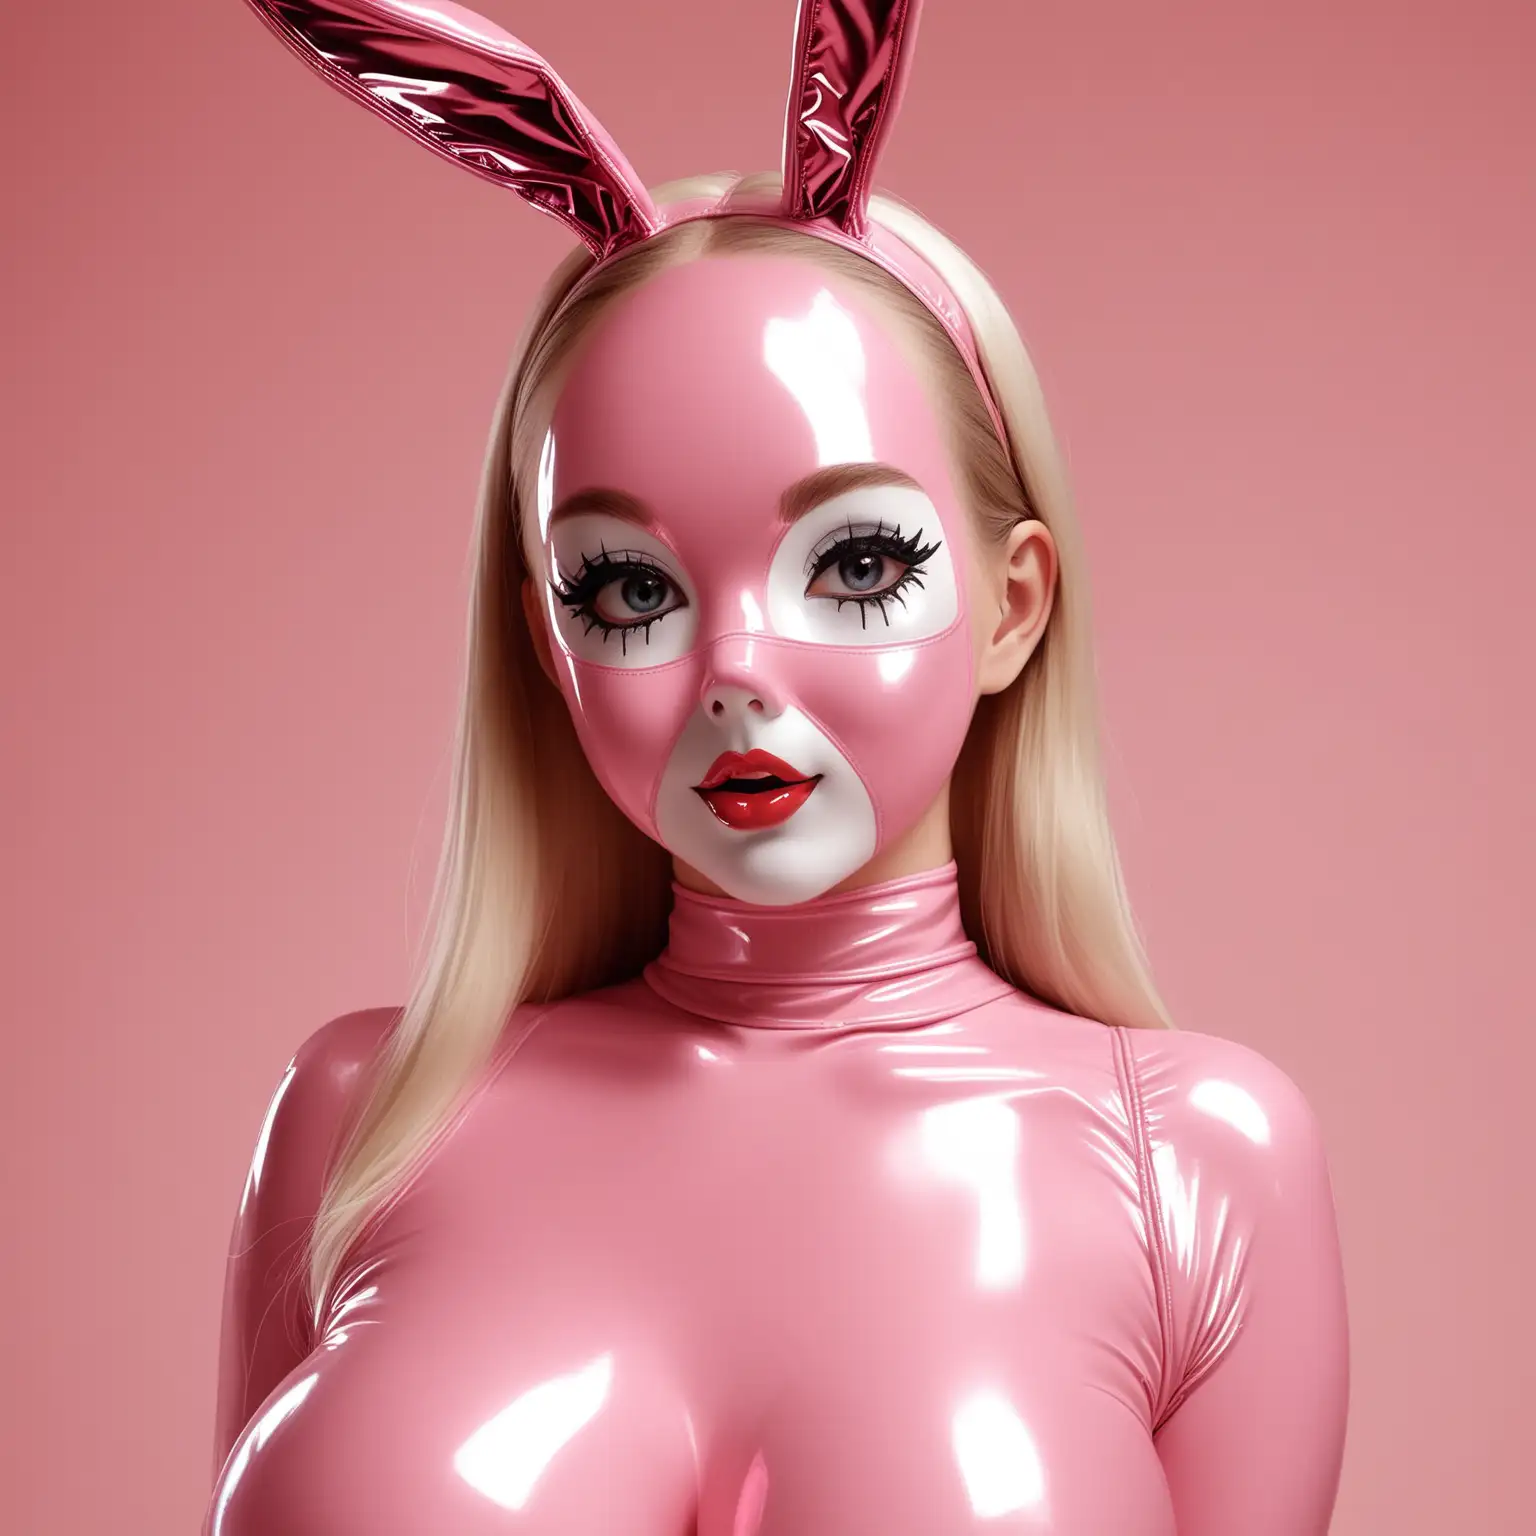 Latex-Bunny-Girl-with-Bunny-Makeup-Playful-Costume-Portrait